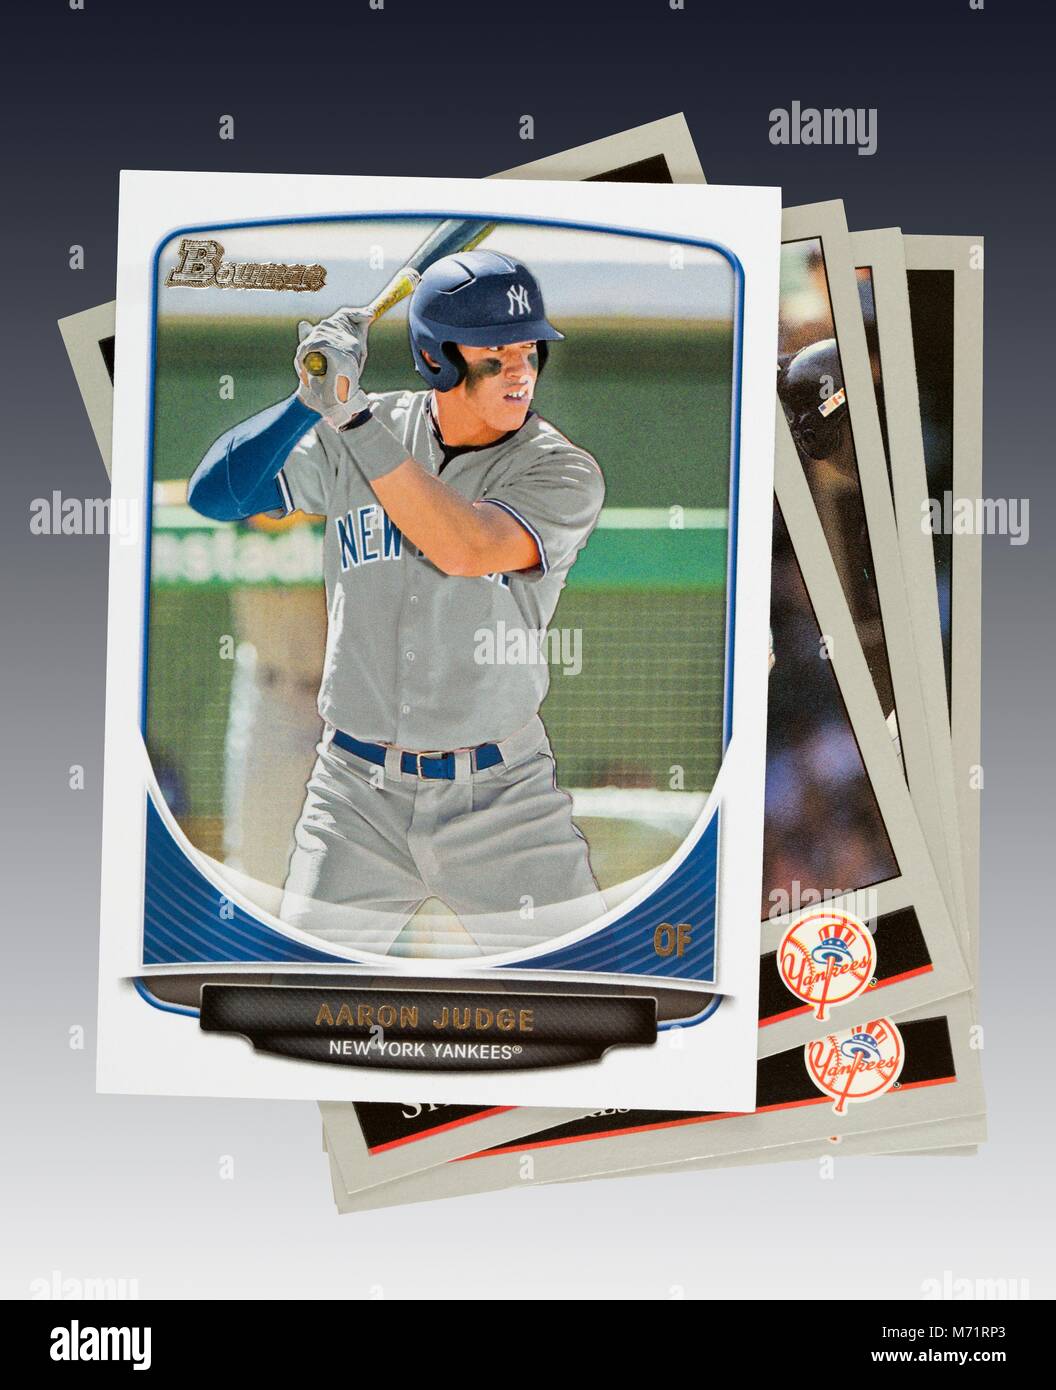 Aaron juez de los Yankees de Nueva York de 2013 Bowman rookie tarjeta en la parte superior de la pila de tarjetas de béisbol Foto de stock